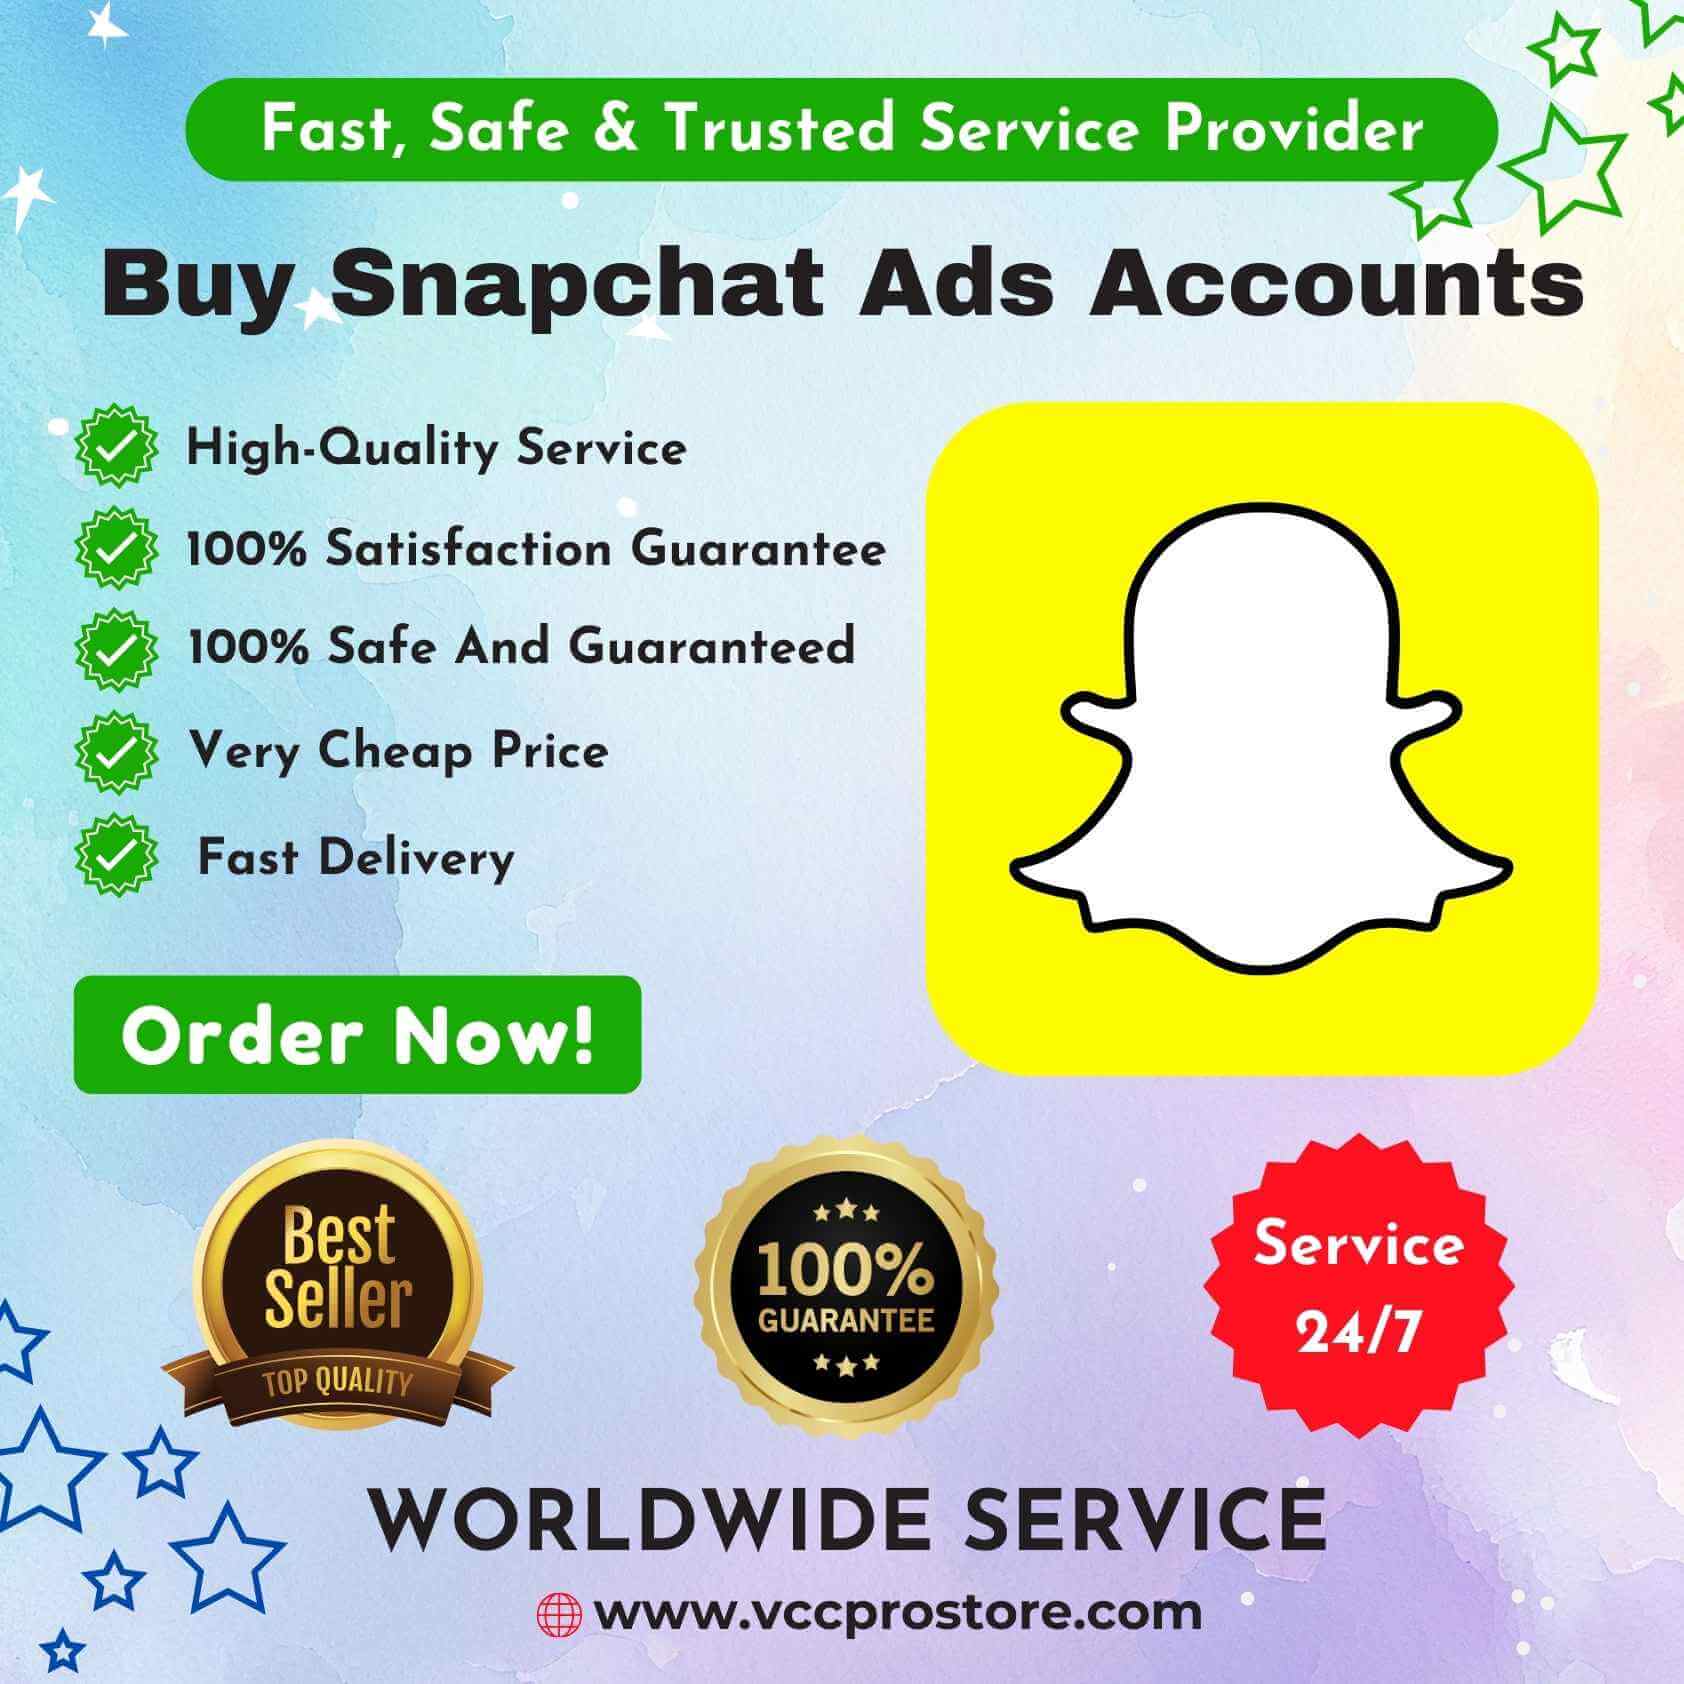 Buy Snapchat Ads Accounts - Get 100% verified Snapchat ads